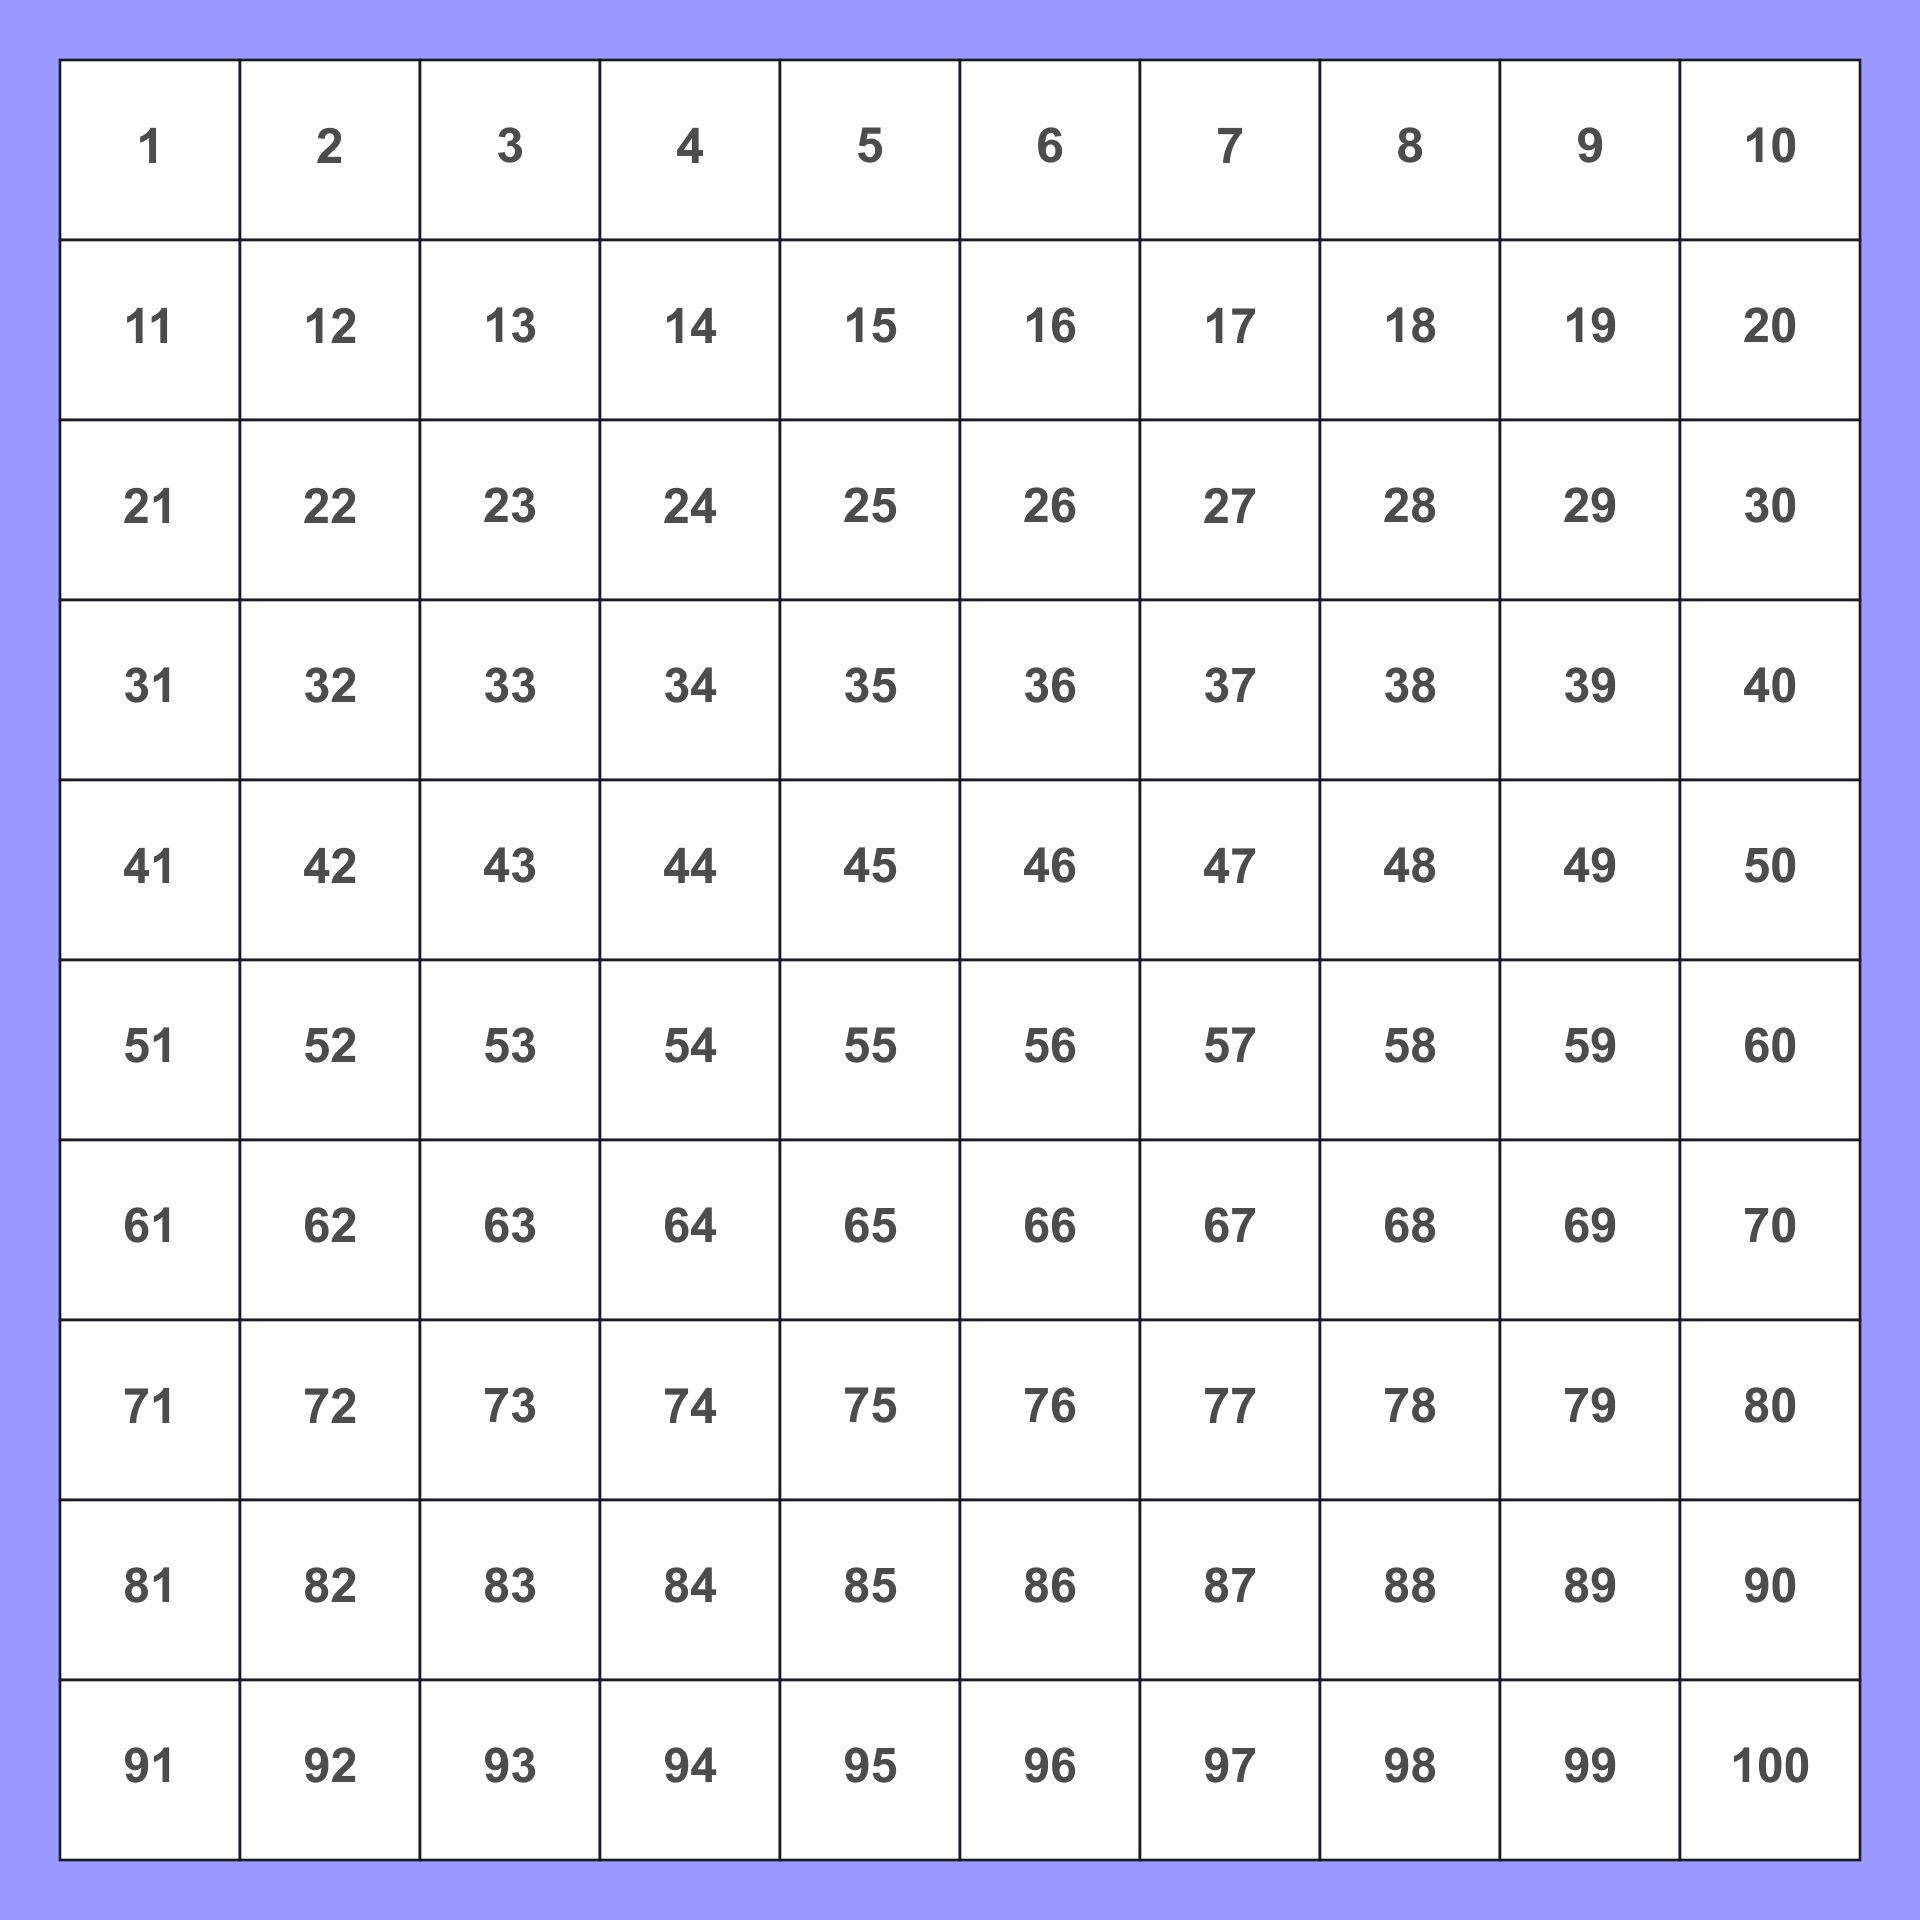 4 Best Images Of Printable Number Grid 1 100 Printable Number Grid 100 Counting 100 Number